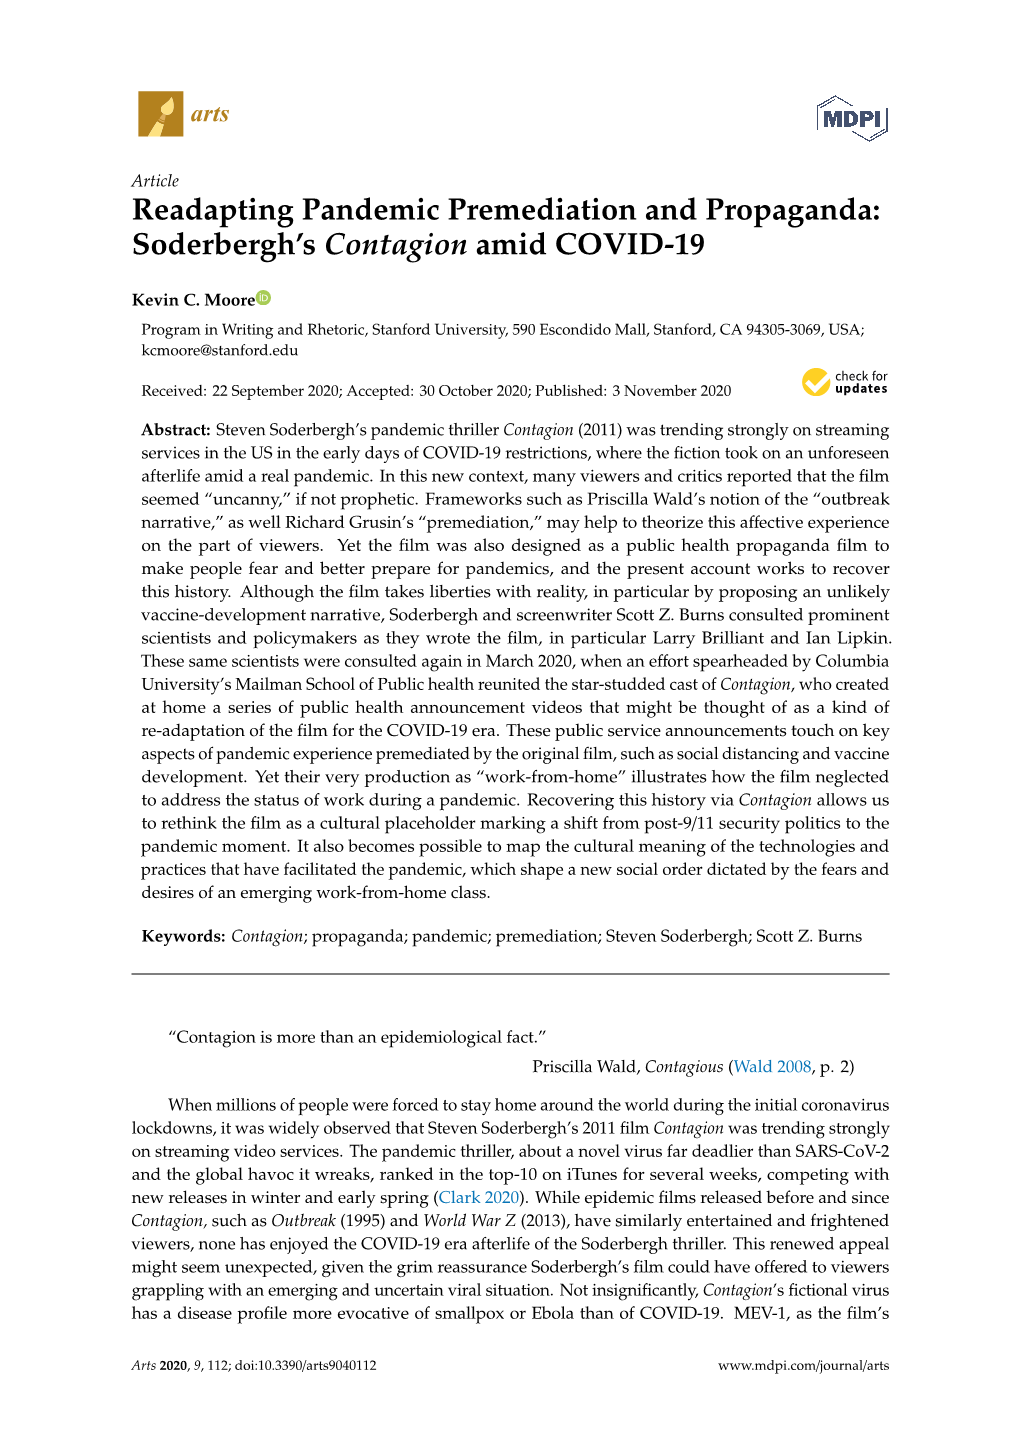 Readapting Pandemic Premediation and Propaganda: Soderbergh's Contagion Amid COVID-19